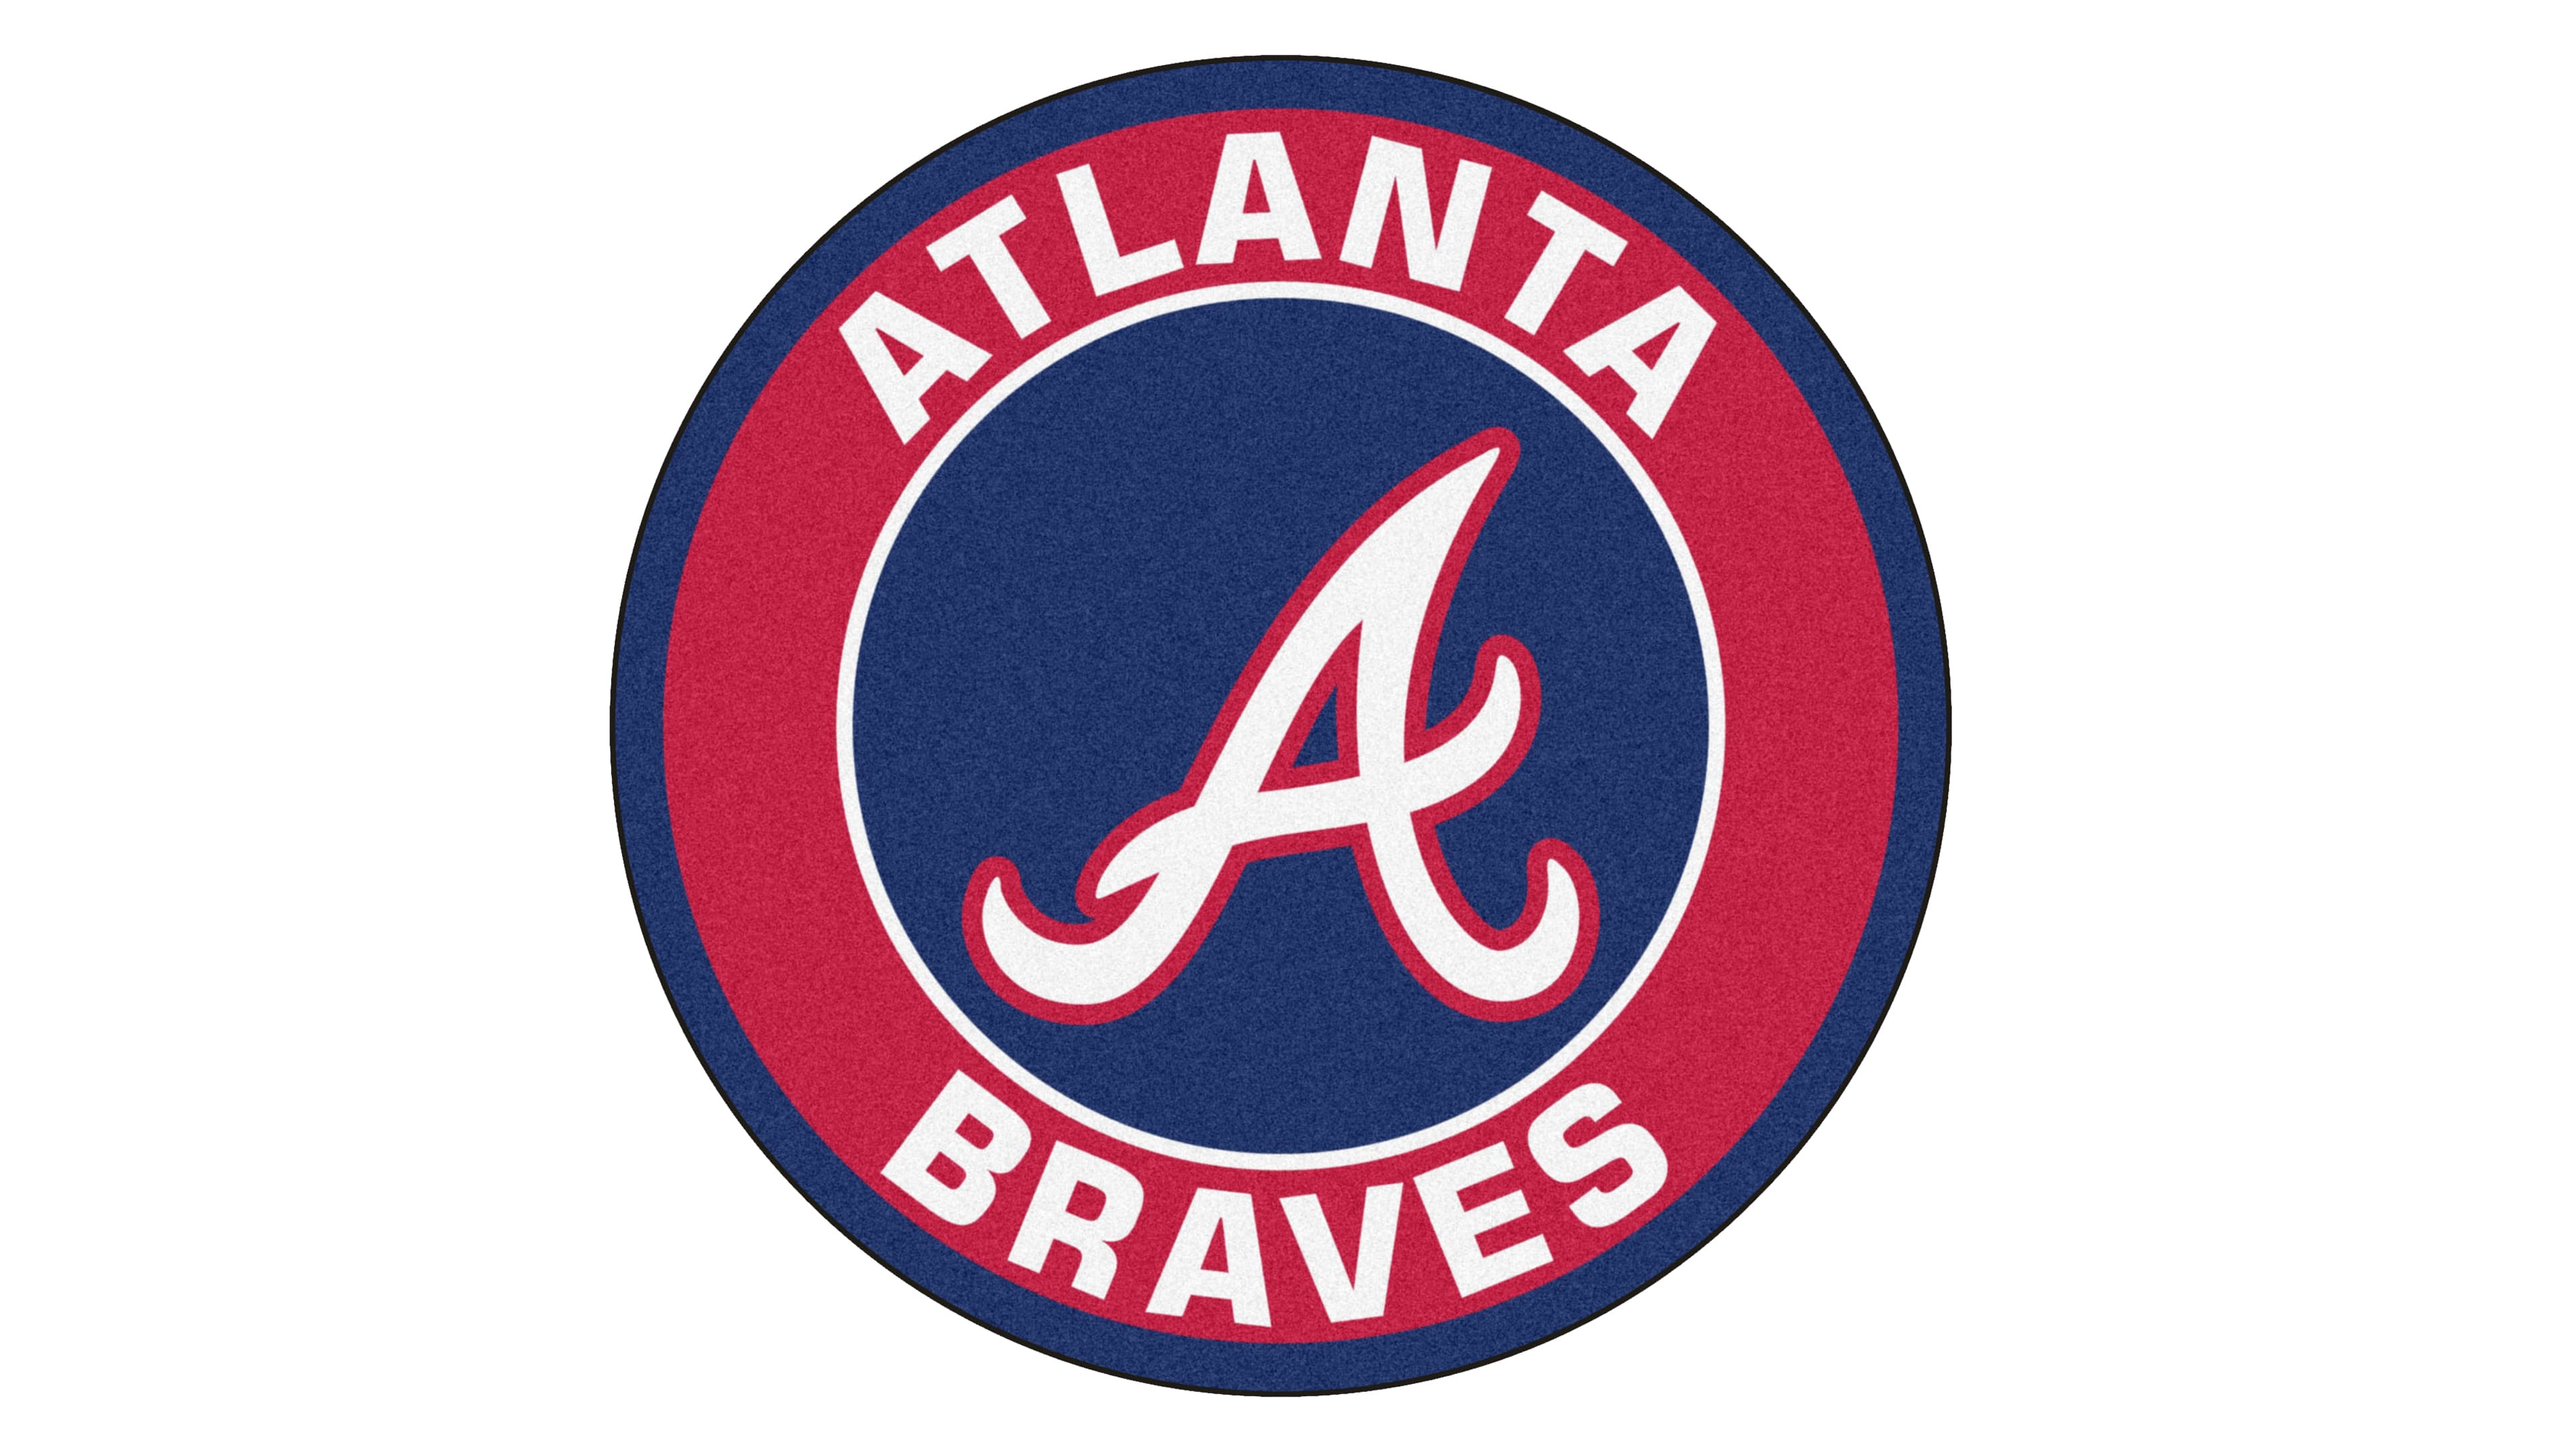 Full 2024 schedule : r/AtlantaBraves